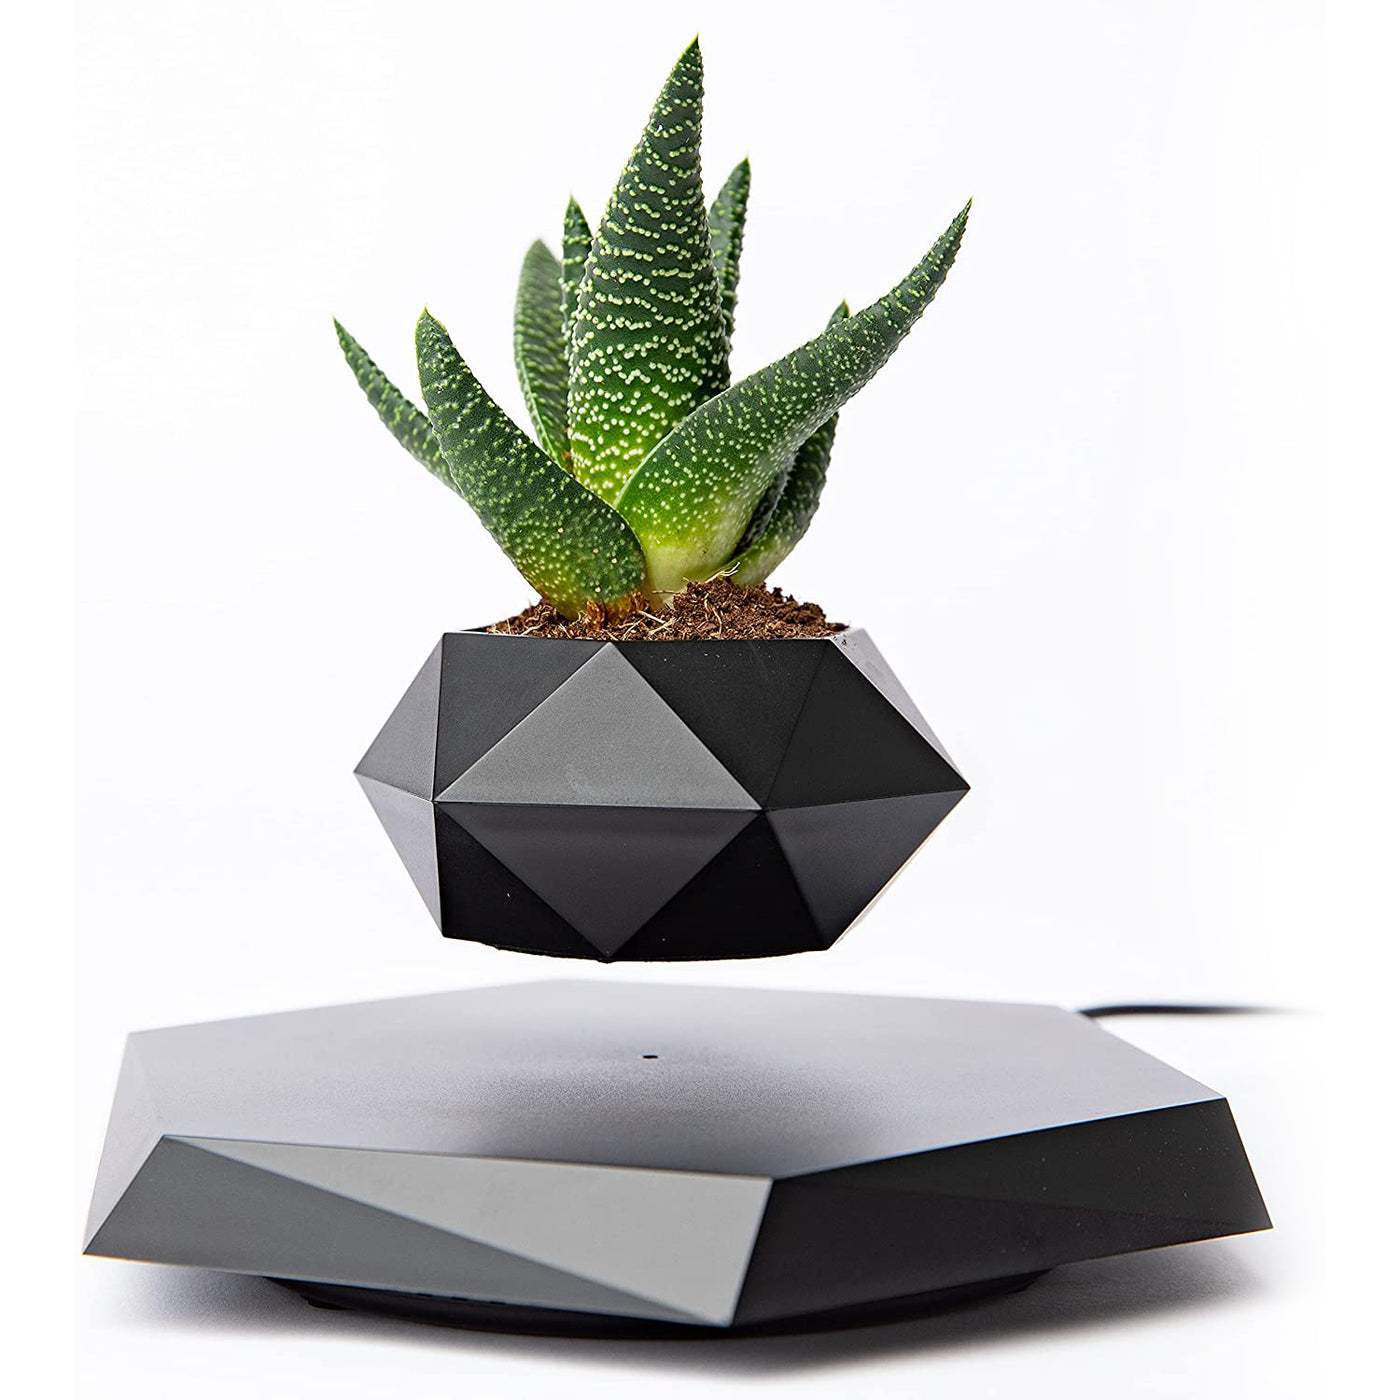 LANGTU Magnetic Levitating Air Bonsai Pot Floating Flower Pot Rotating Potted Planter for Home, Office & Desk Decor Black